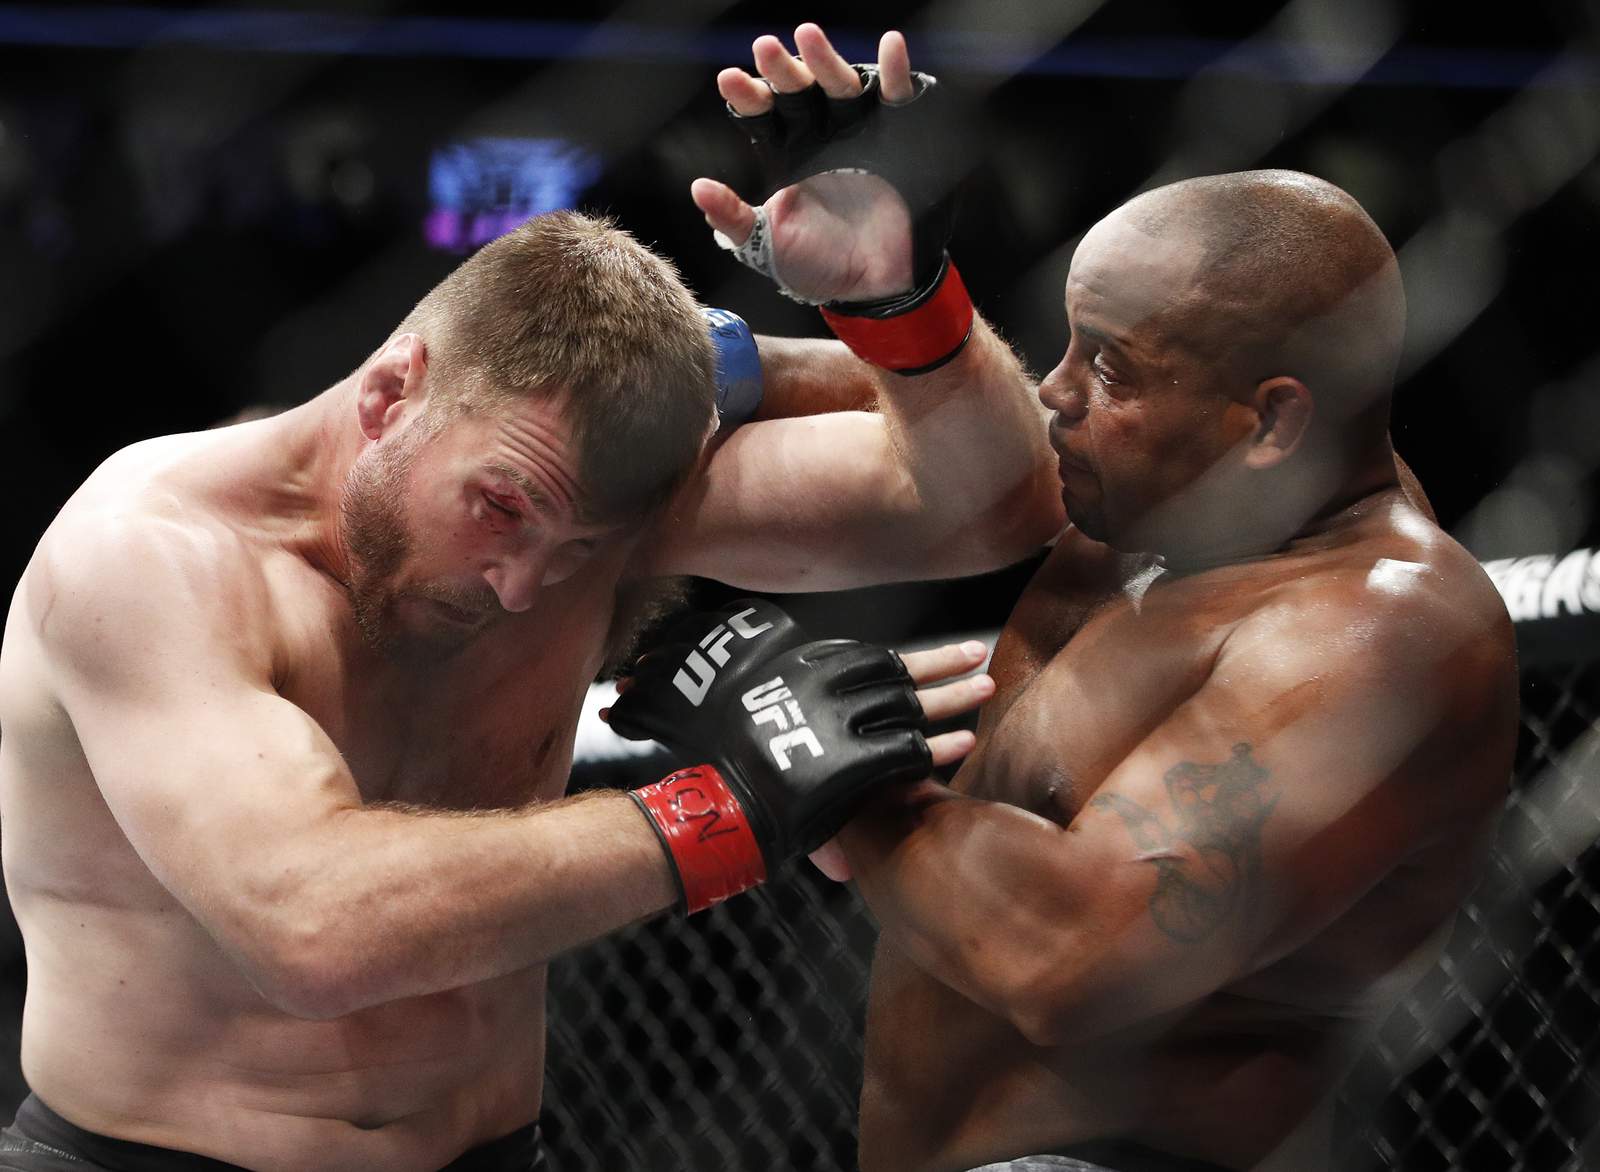 UFC legacies on line for Miocic-Cormier trilogy title fight